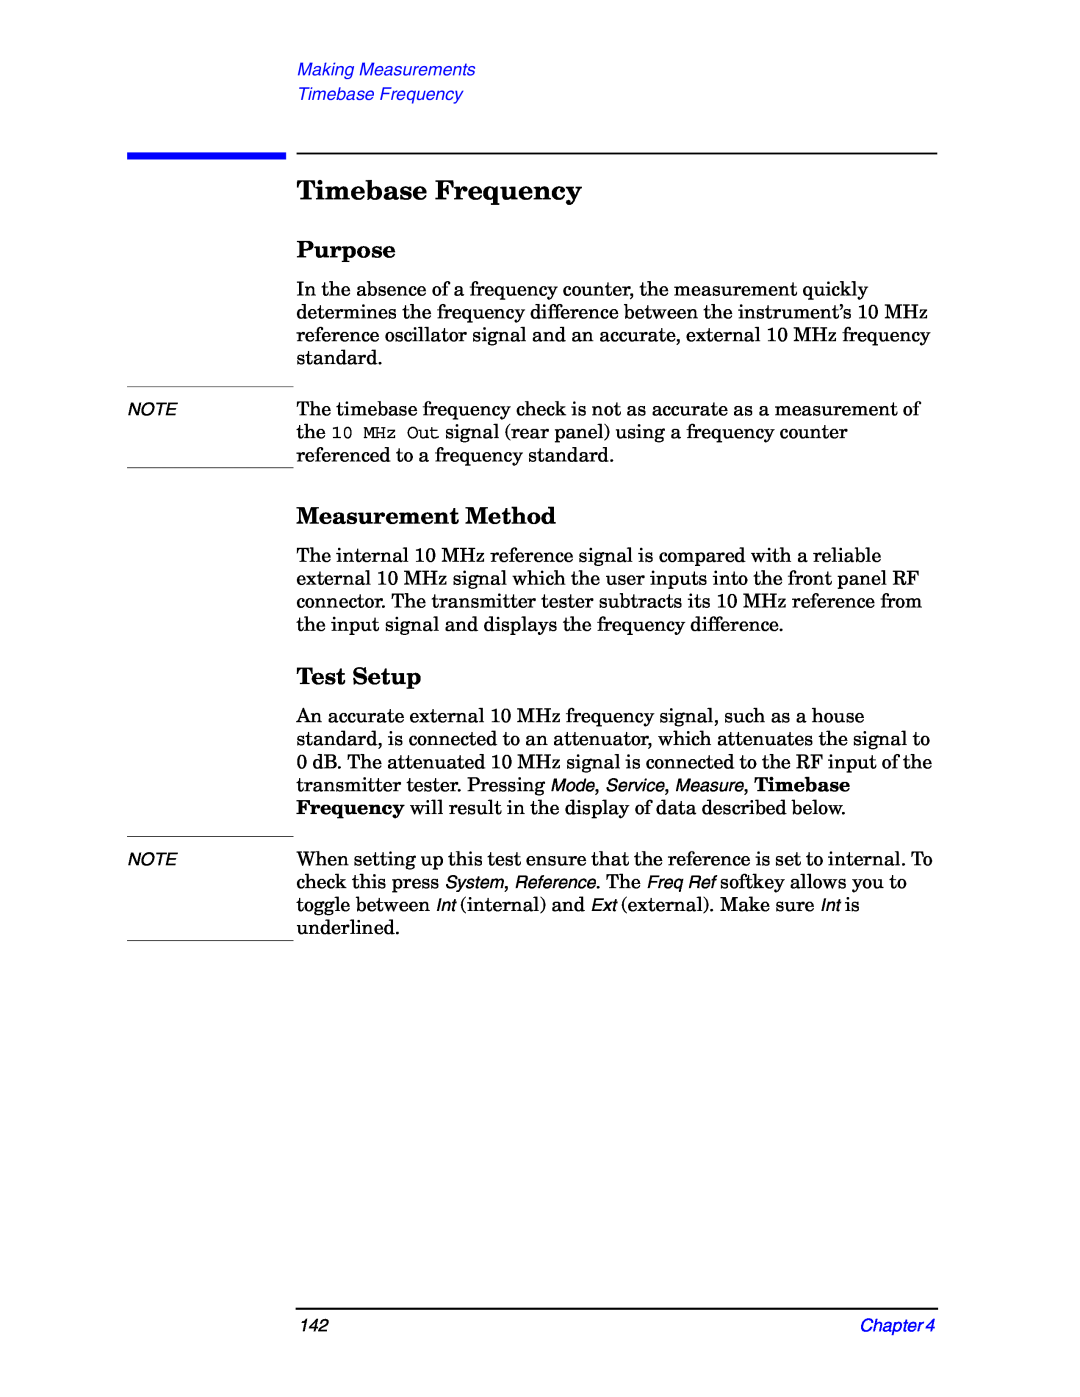 Agilent Technologies E4406A manual Timebase Frequency, Test Setup, Purpose, Measurement Method 